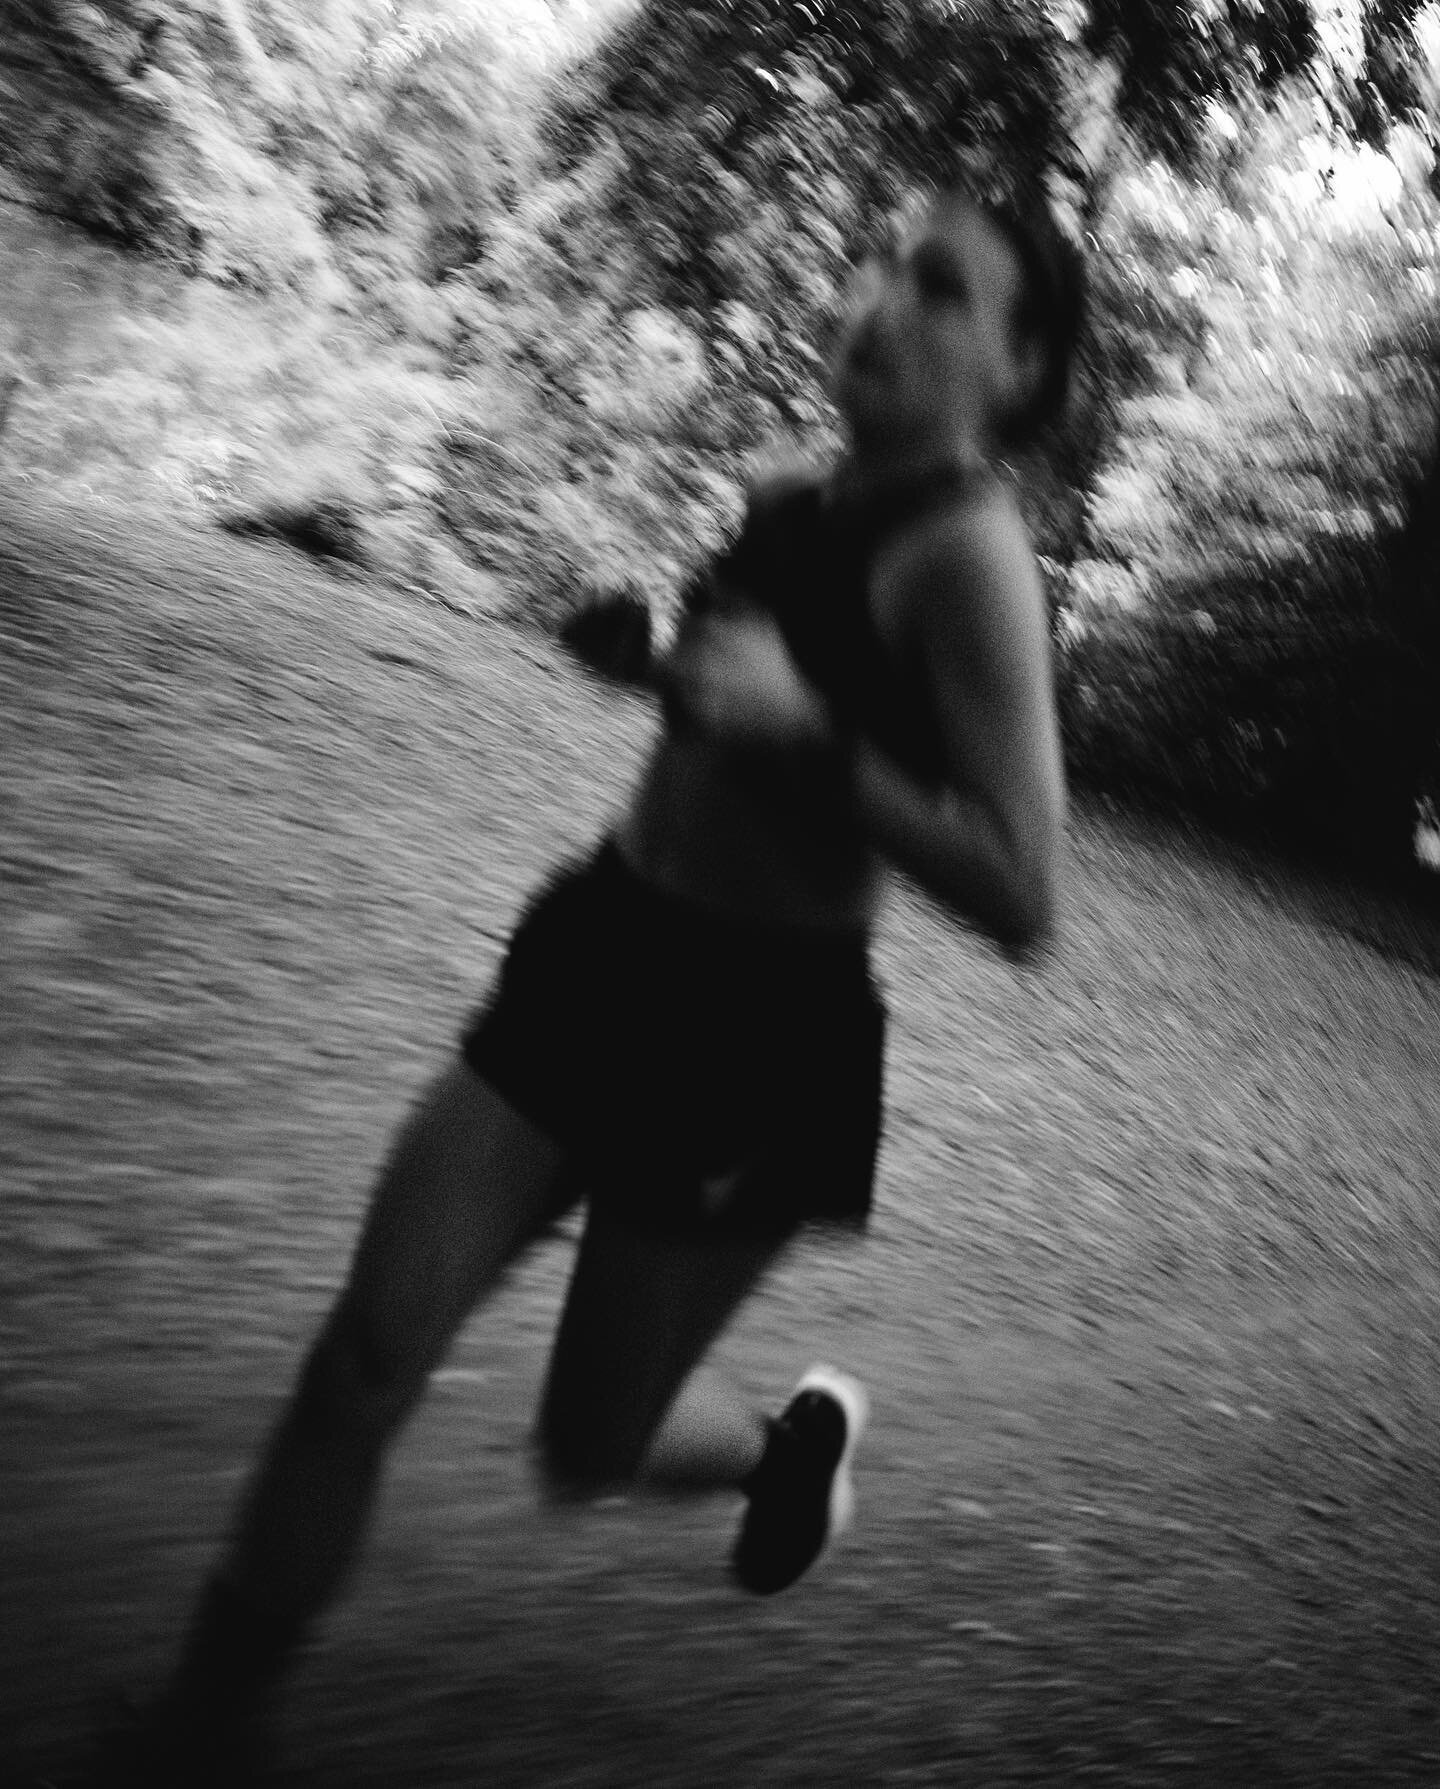 running with @katharinahfm 

#running #munich #englischergarten #blackandwhitephotography #photography